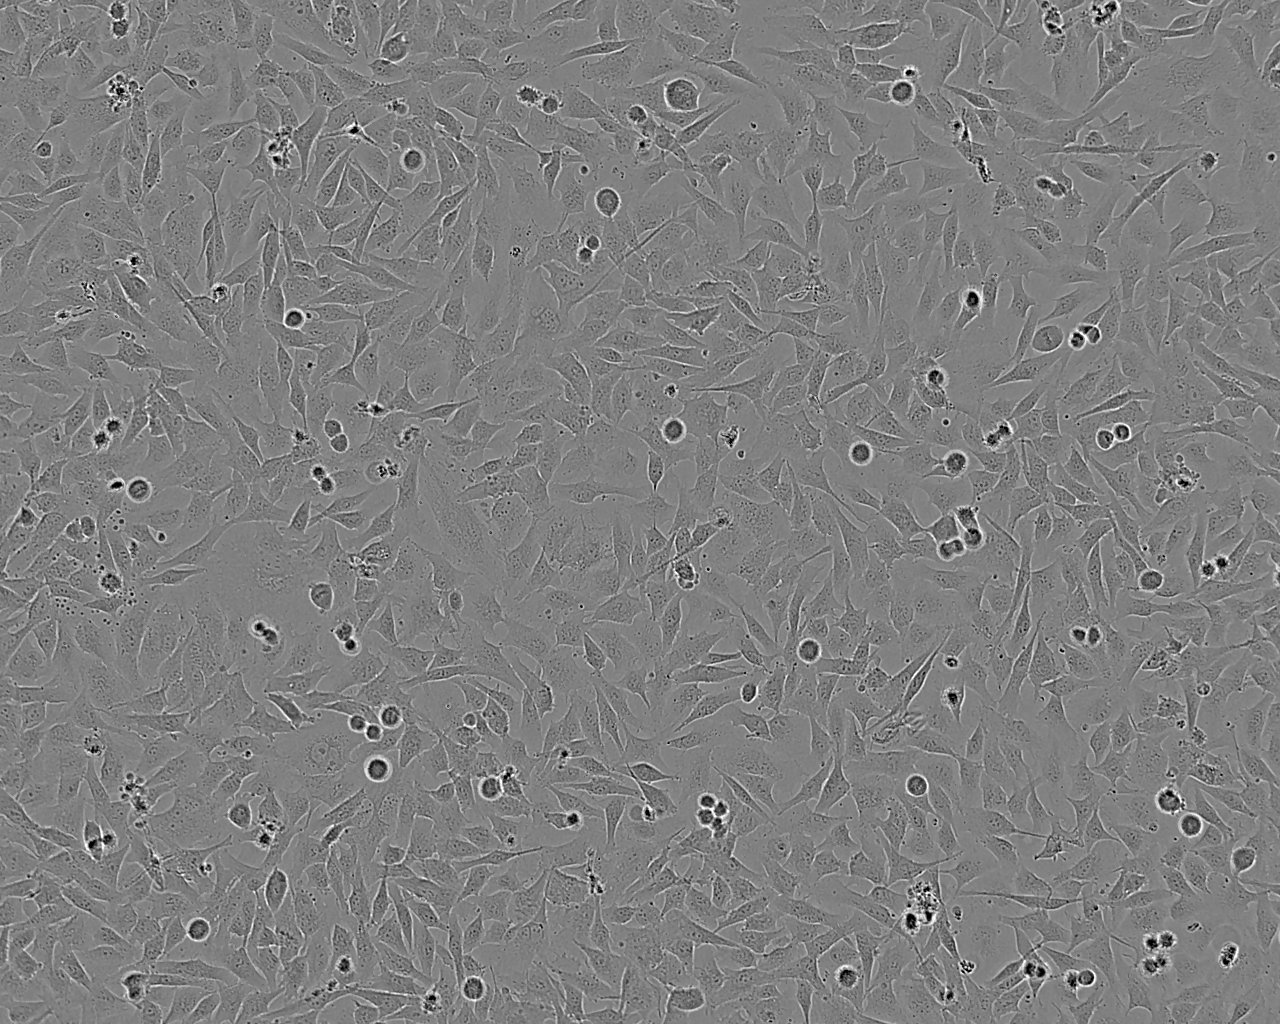 WERI-Rb-1 Cell:人视网膜母细胞瘤细胞系,WERI-Rb-1 Cell